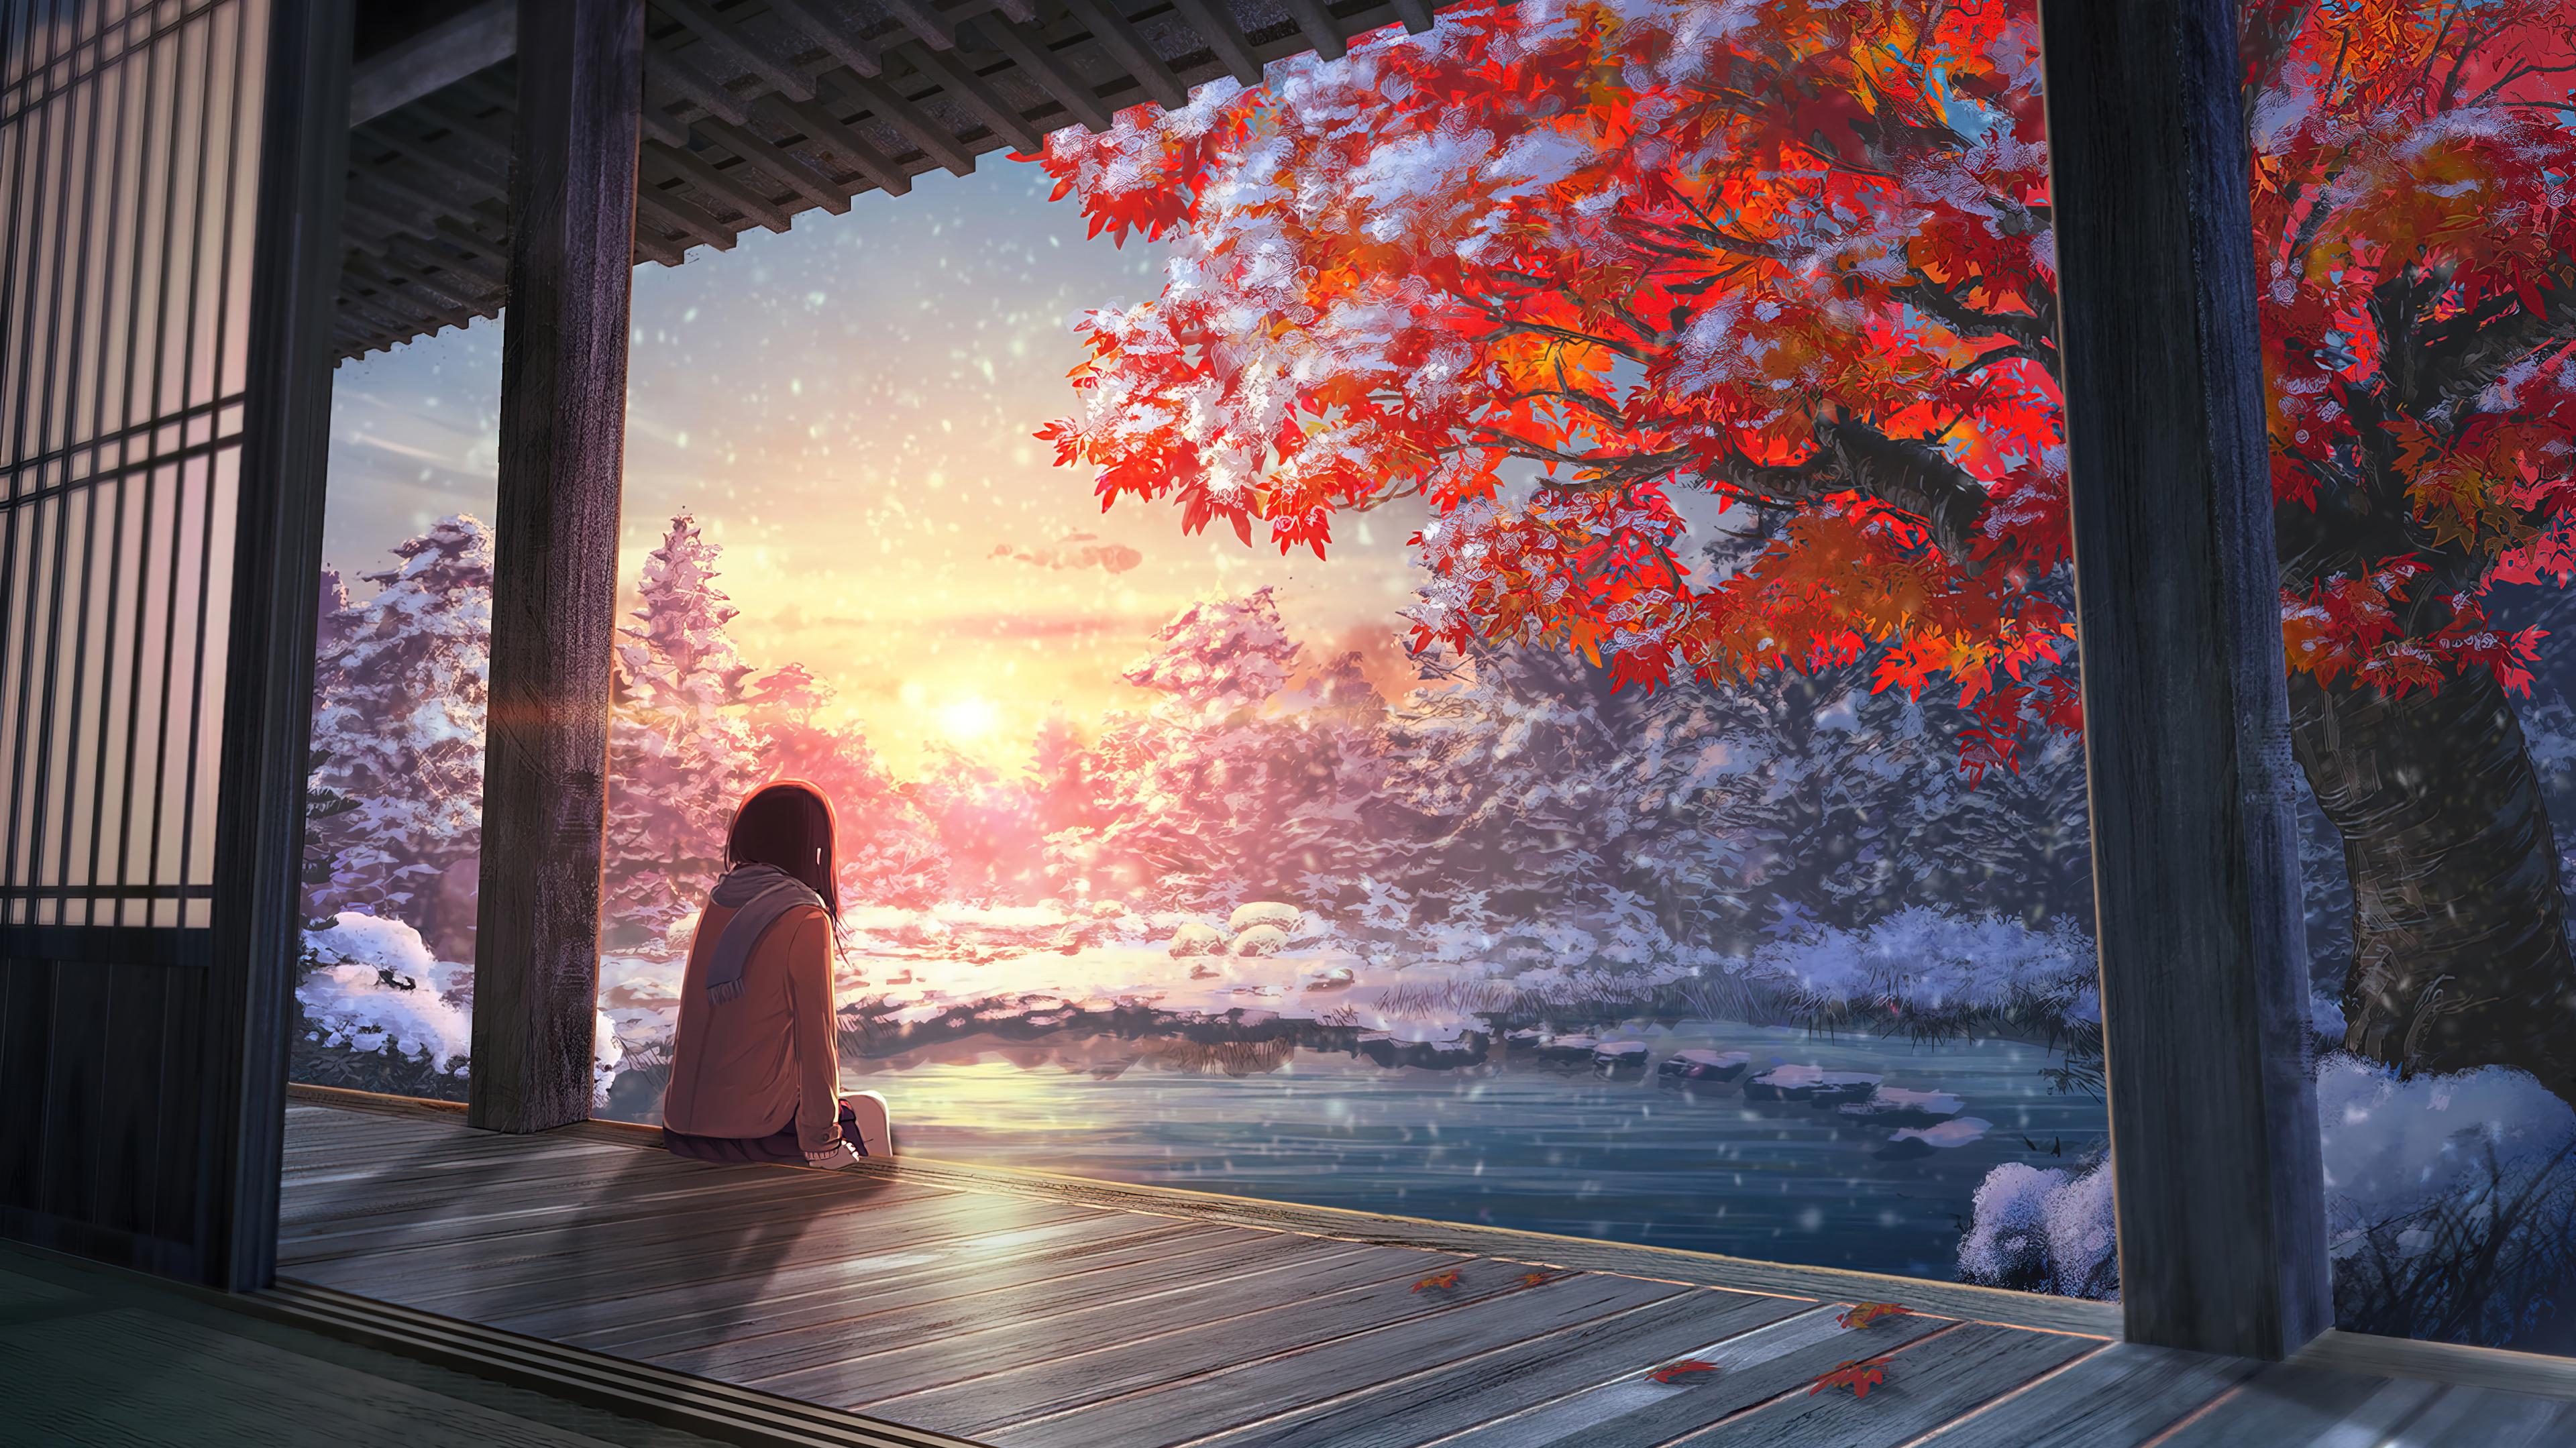 Winter Autumn Anime Girl Sunset Wallpaper iPhone Phone 4k 4090e